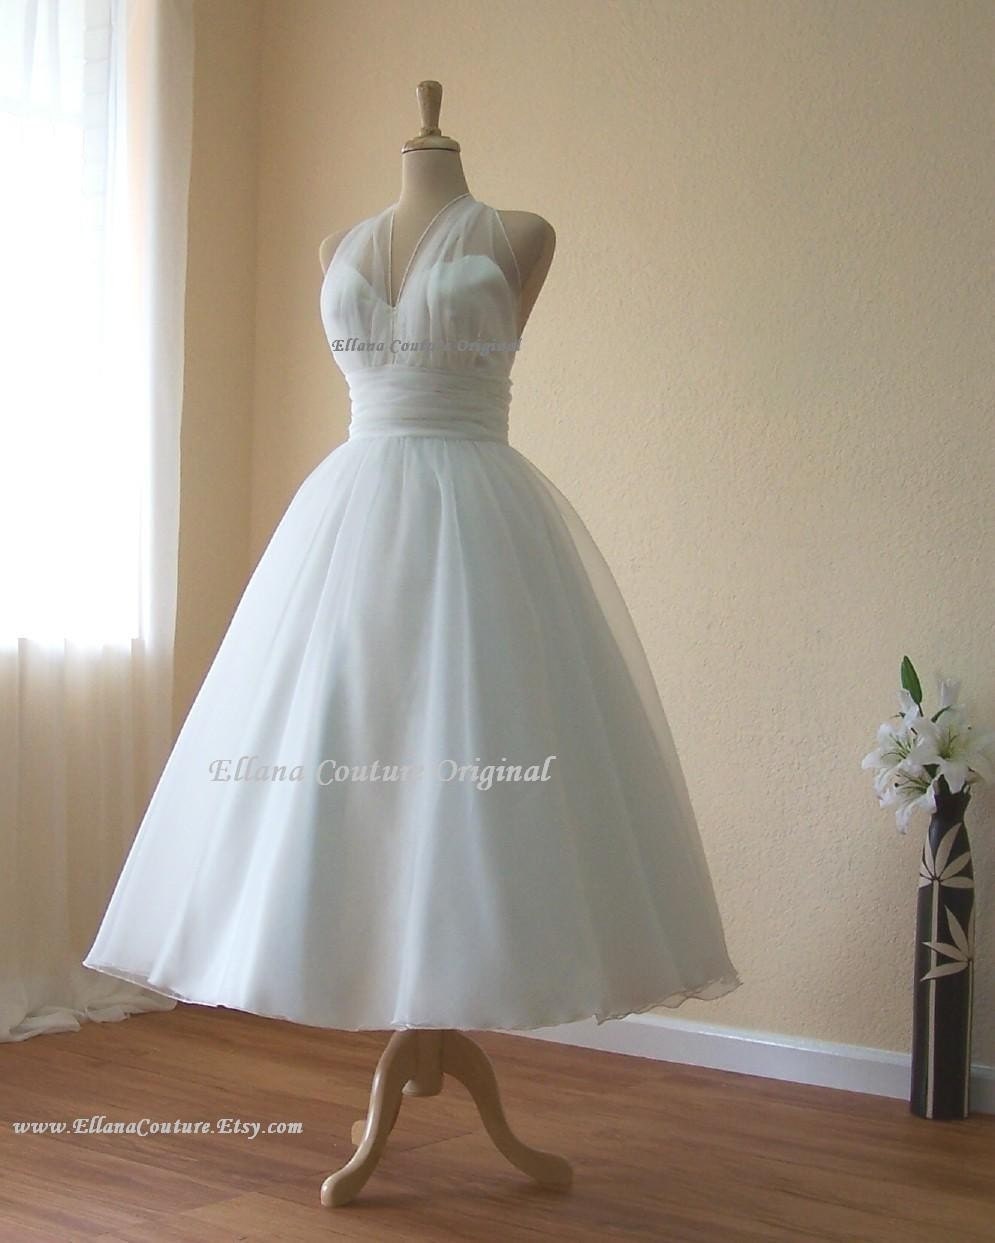 50's wedding dress